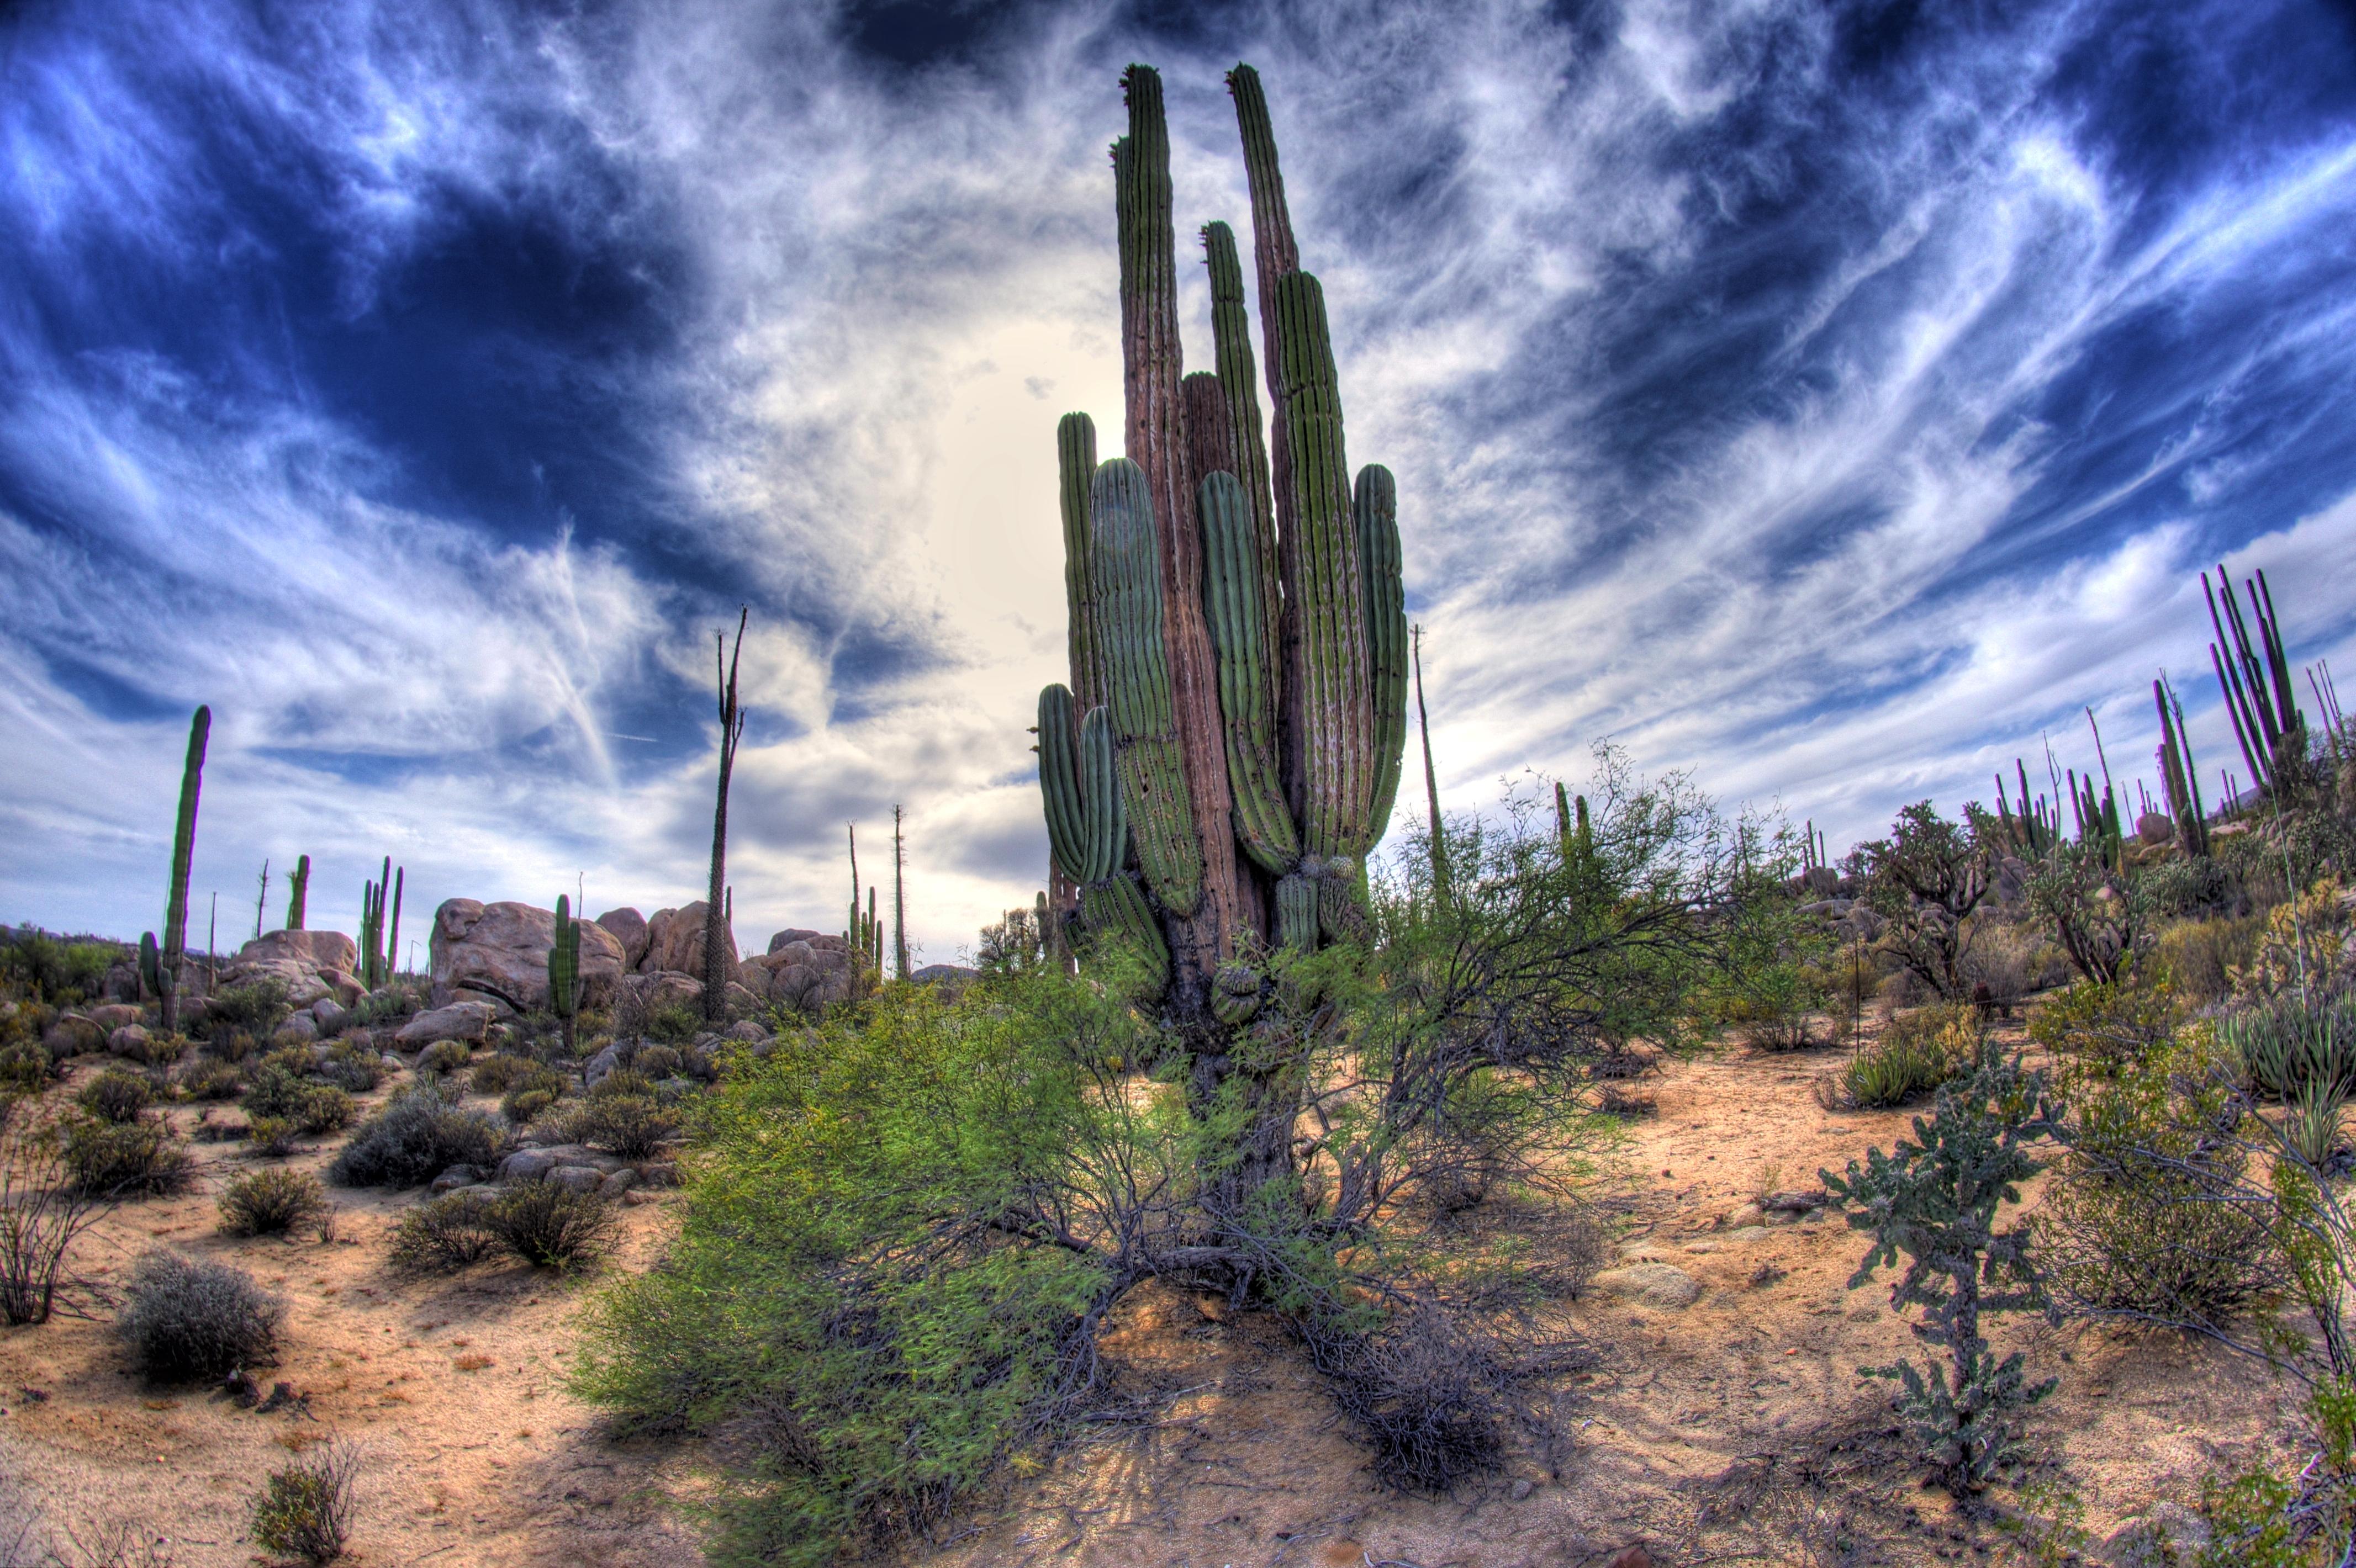 Cardón sahueso (Pachycereus pringlei), the tallest cactus species in the world.